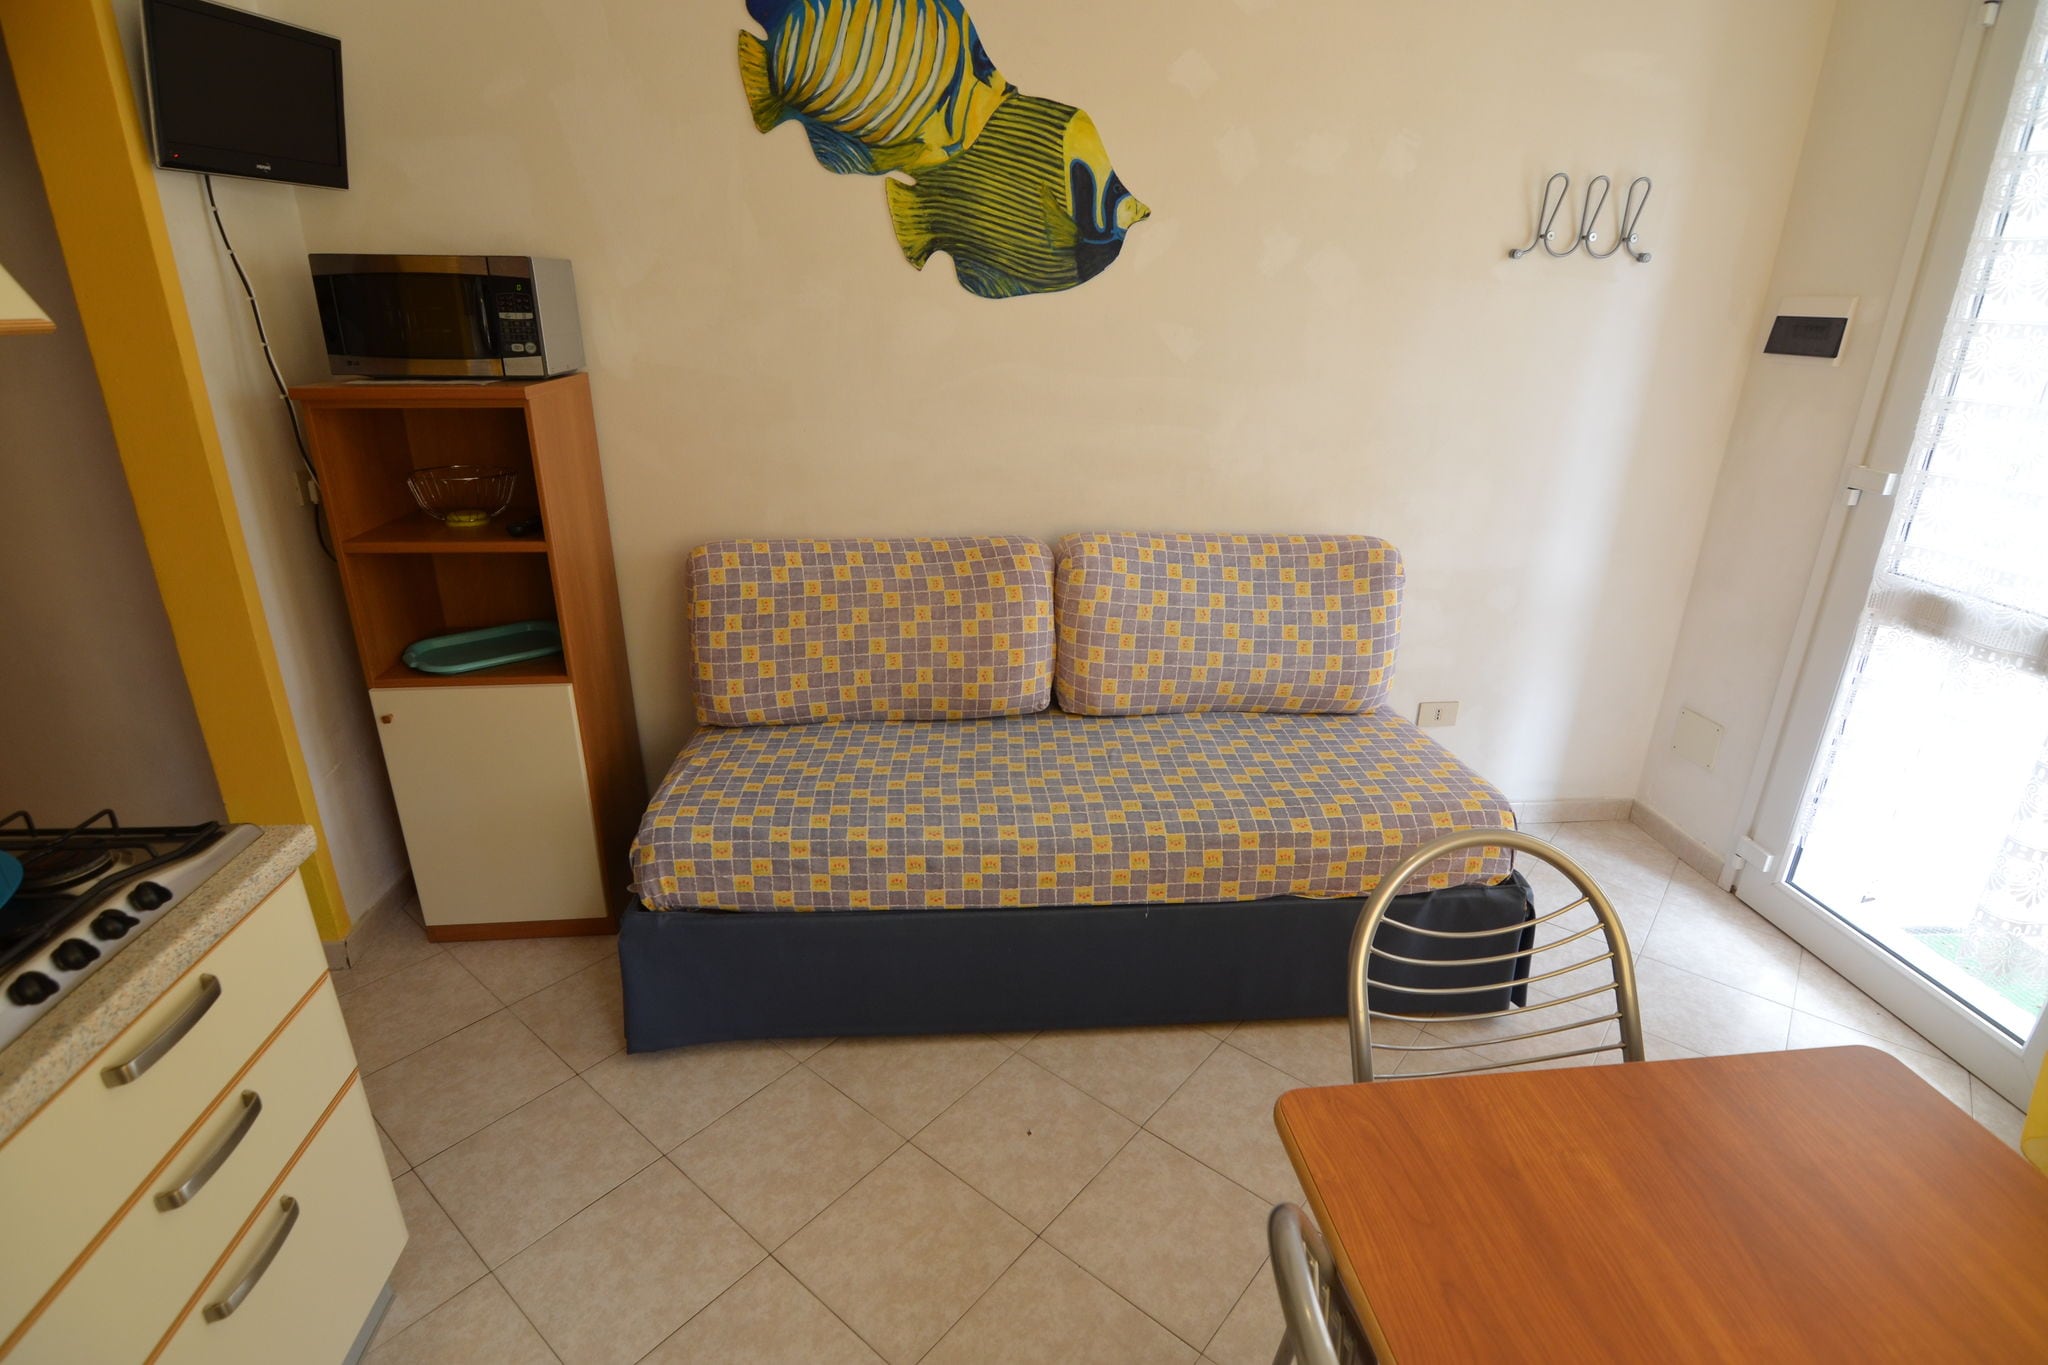 Komfortable Wohnung in Lido degli Estensi in Meeresnähe